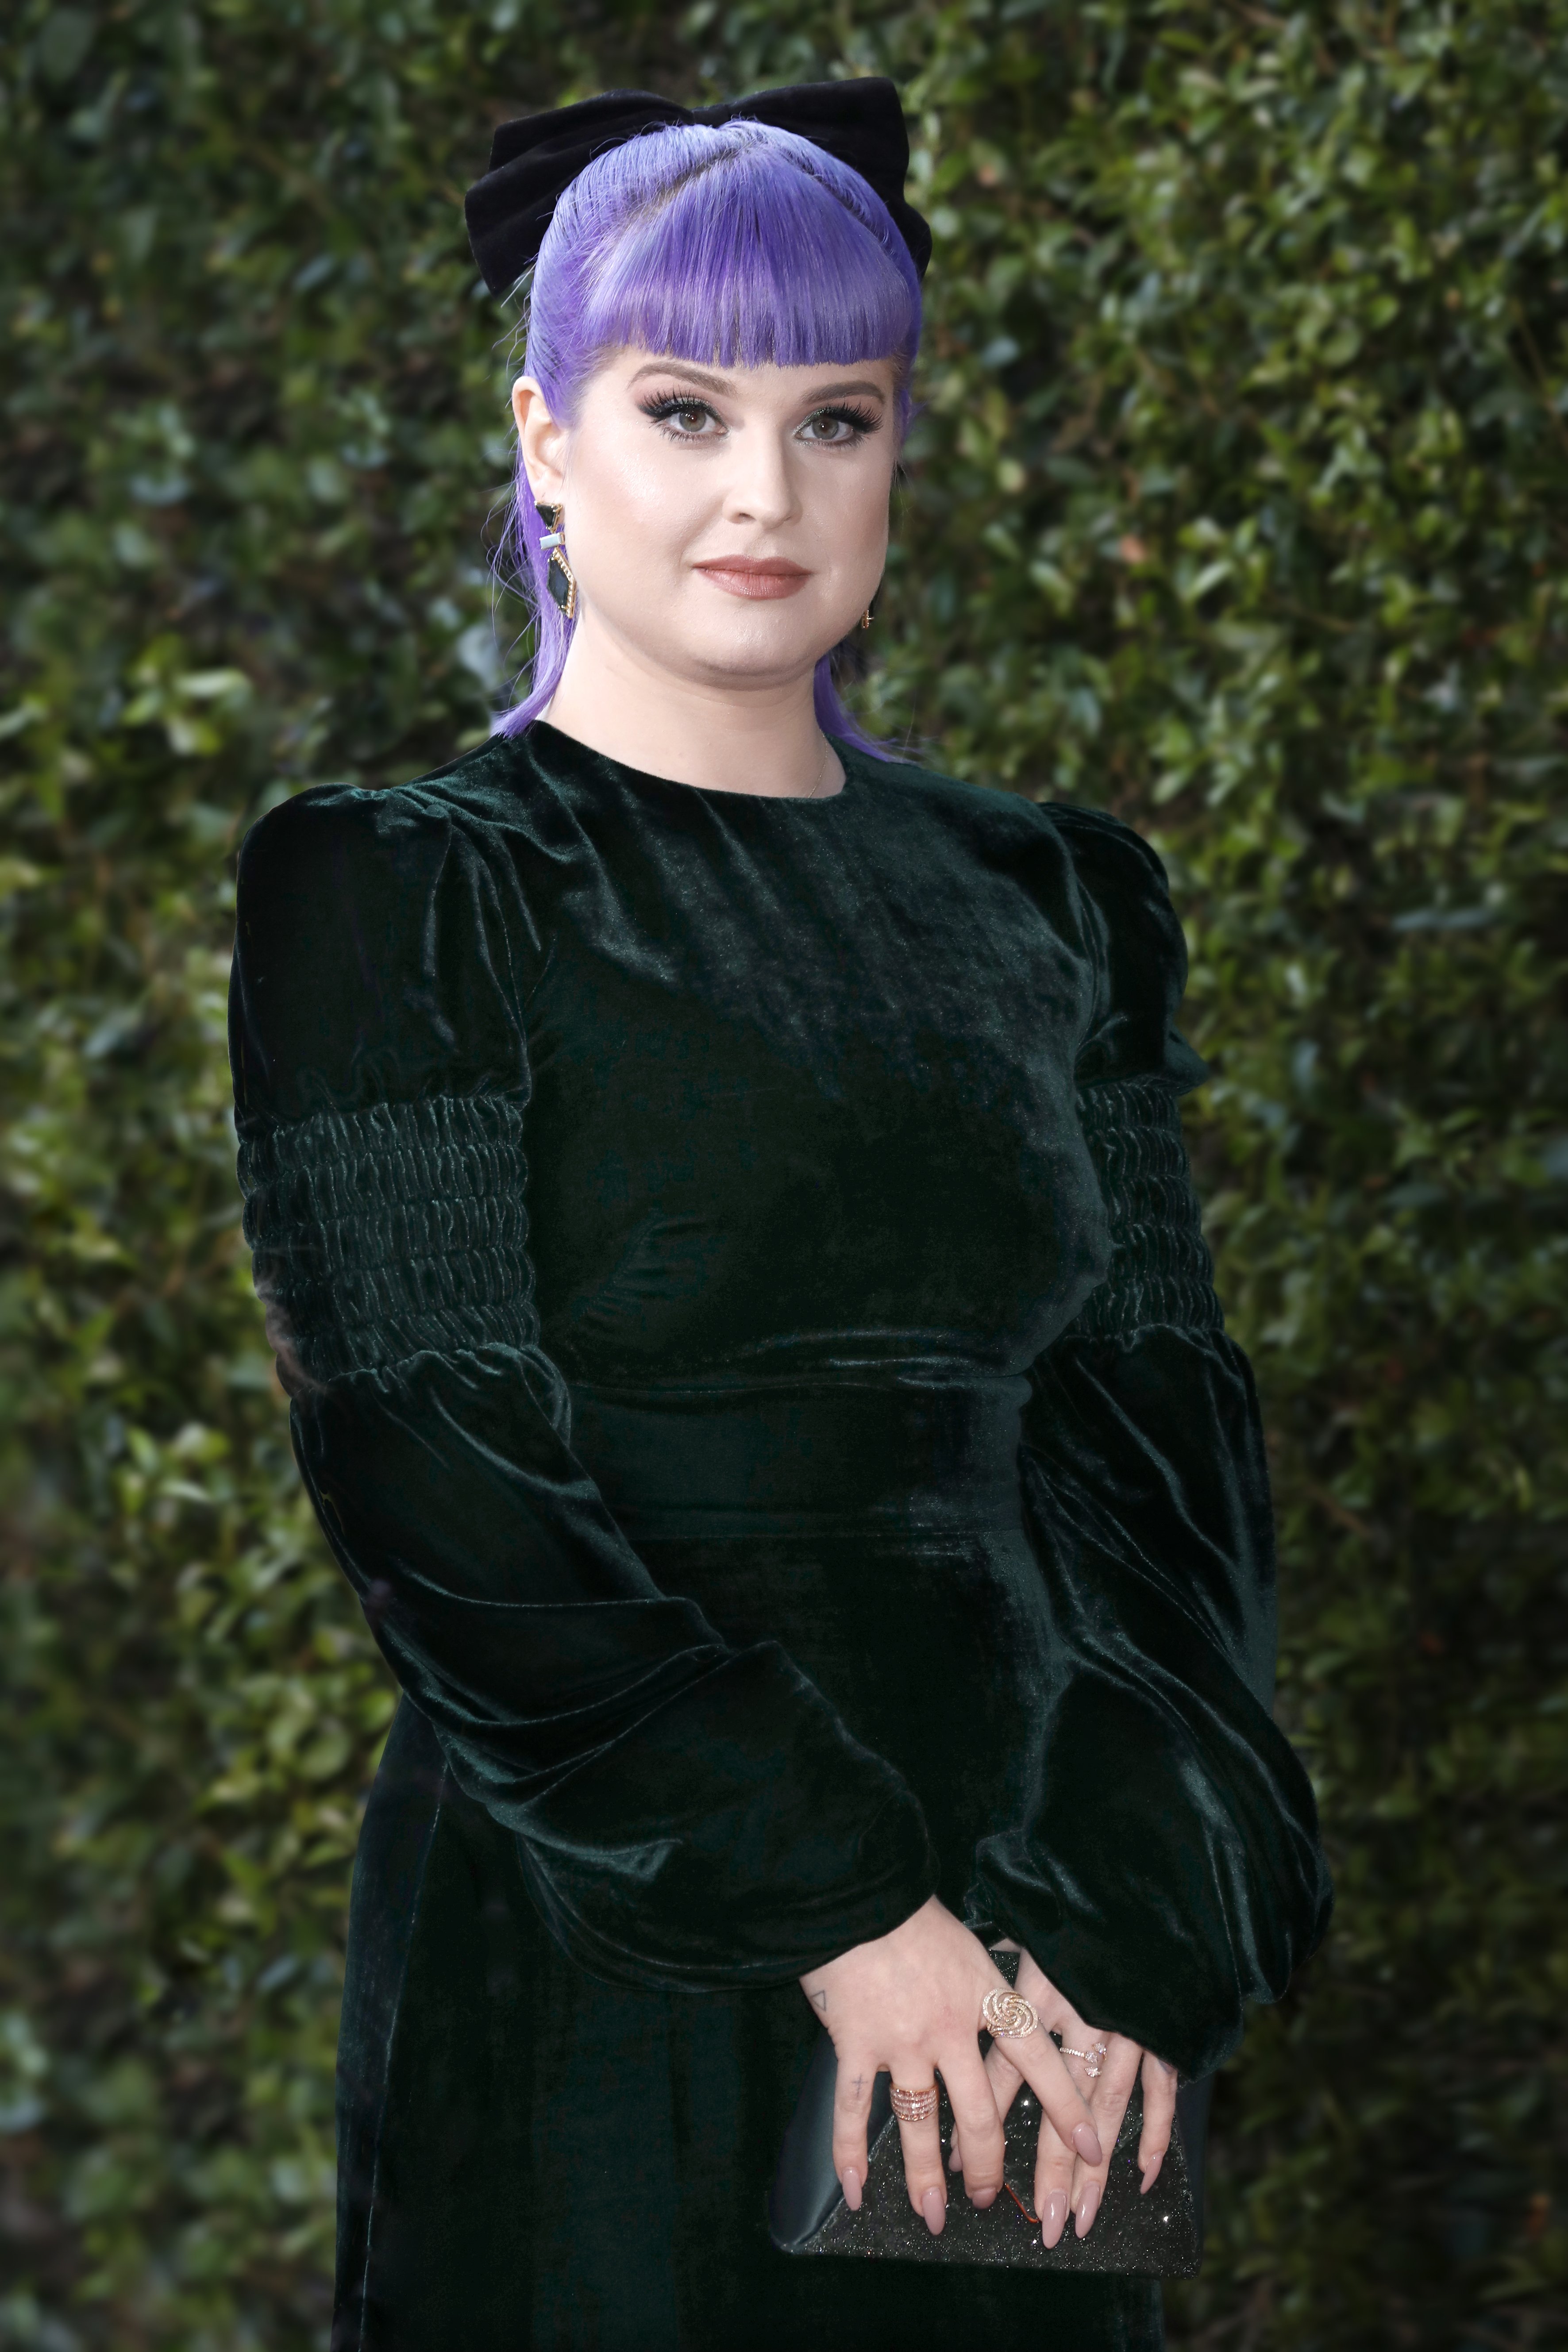 Kelly Osbourne à Los Angeles en 2019. | Source : Getty Images